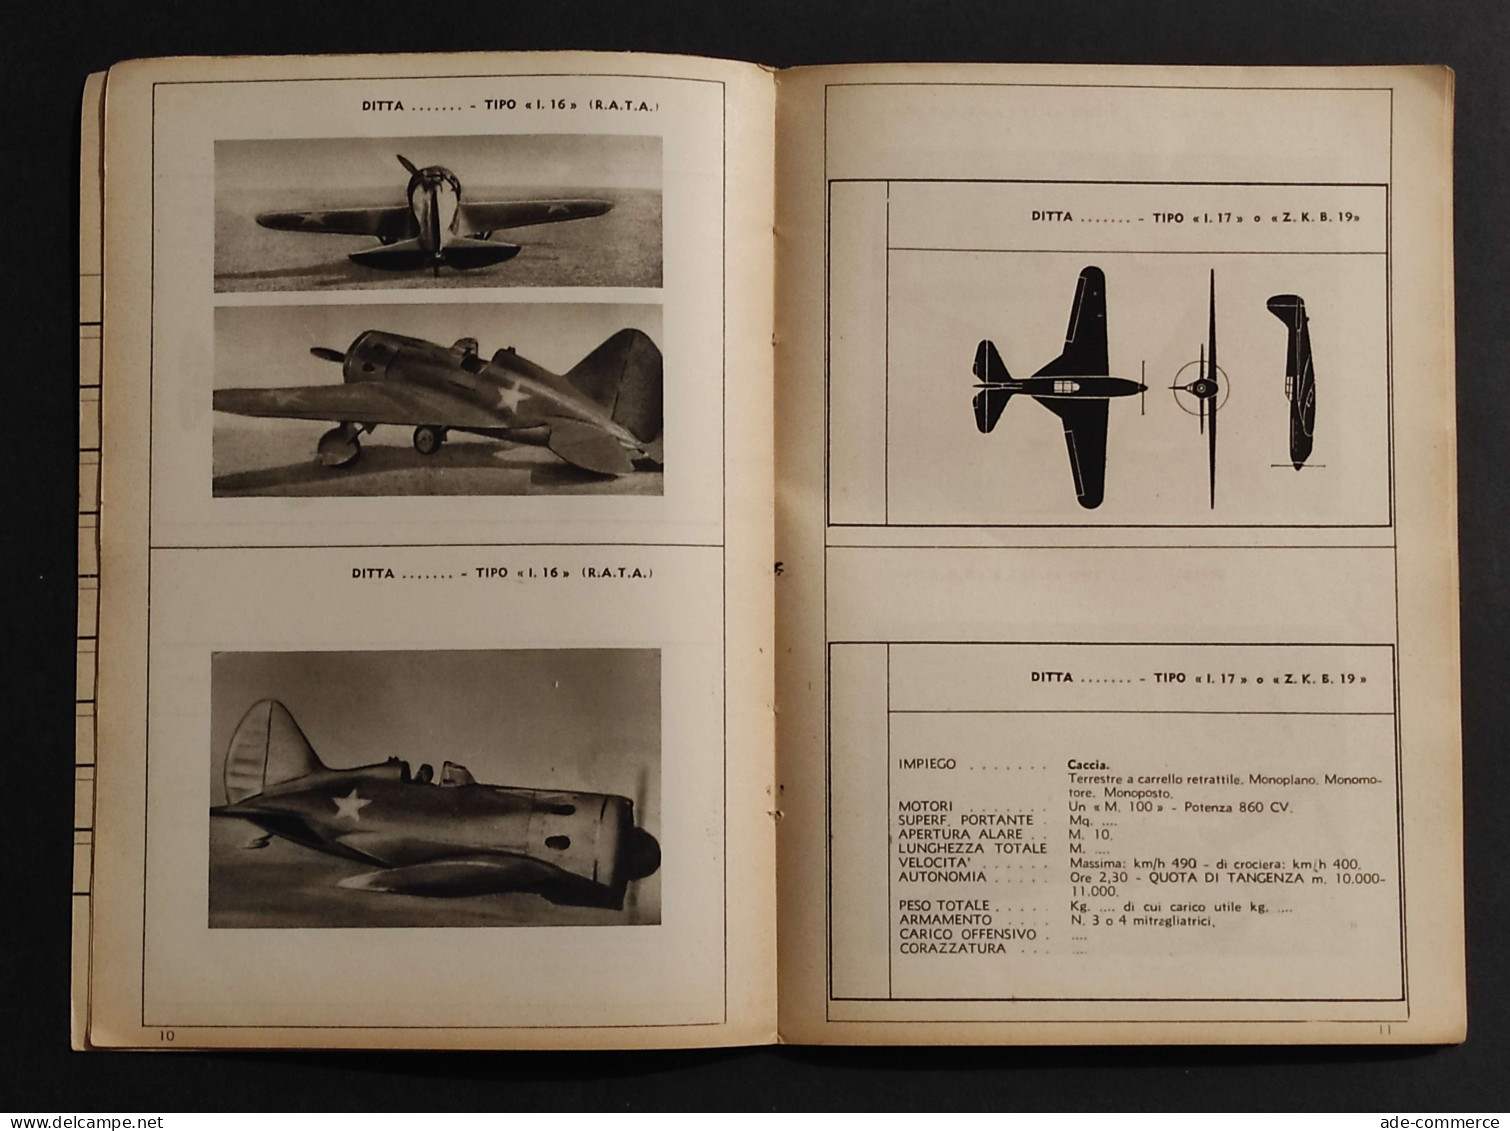 Ecco Il Nemico 16 - Velivoli Sovietici - Ed. Aeronautico - 1942 - Engines